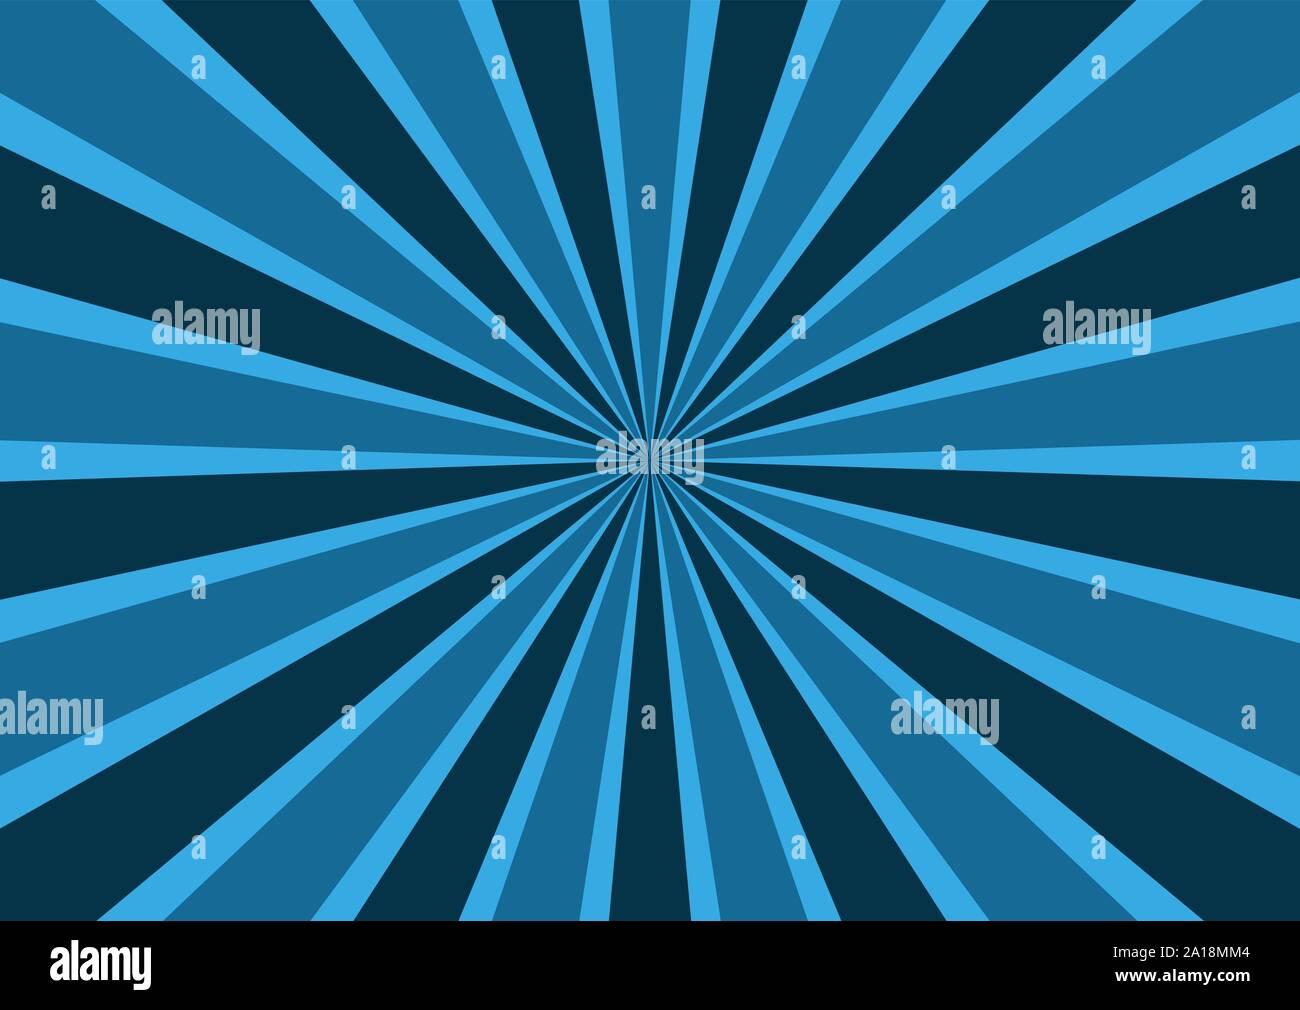 Sunburst Starburst Background Converging Lines Vector Illustration Stock Vector Image Art Alamy